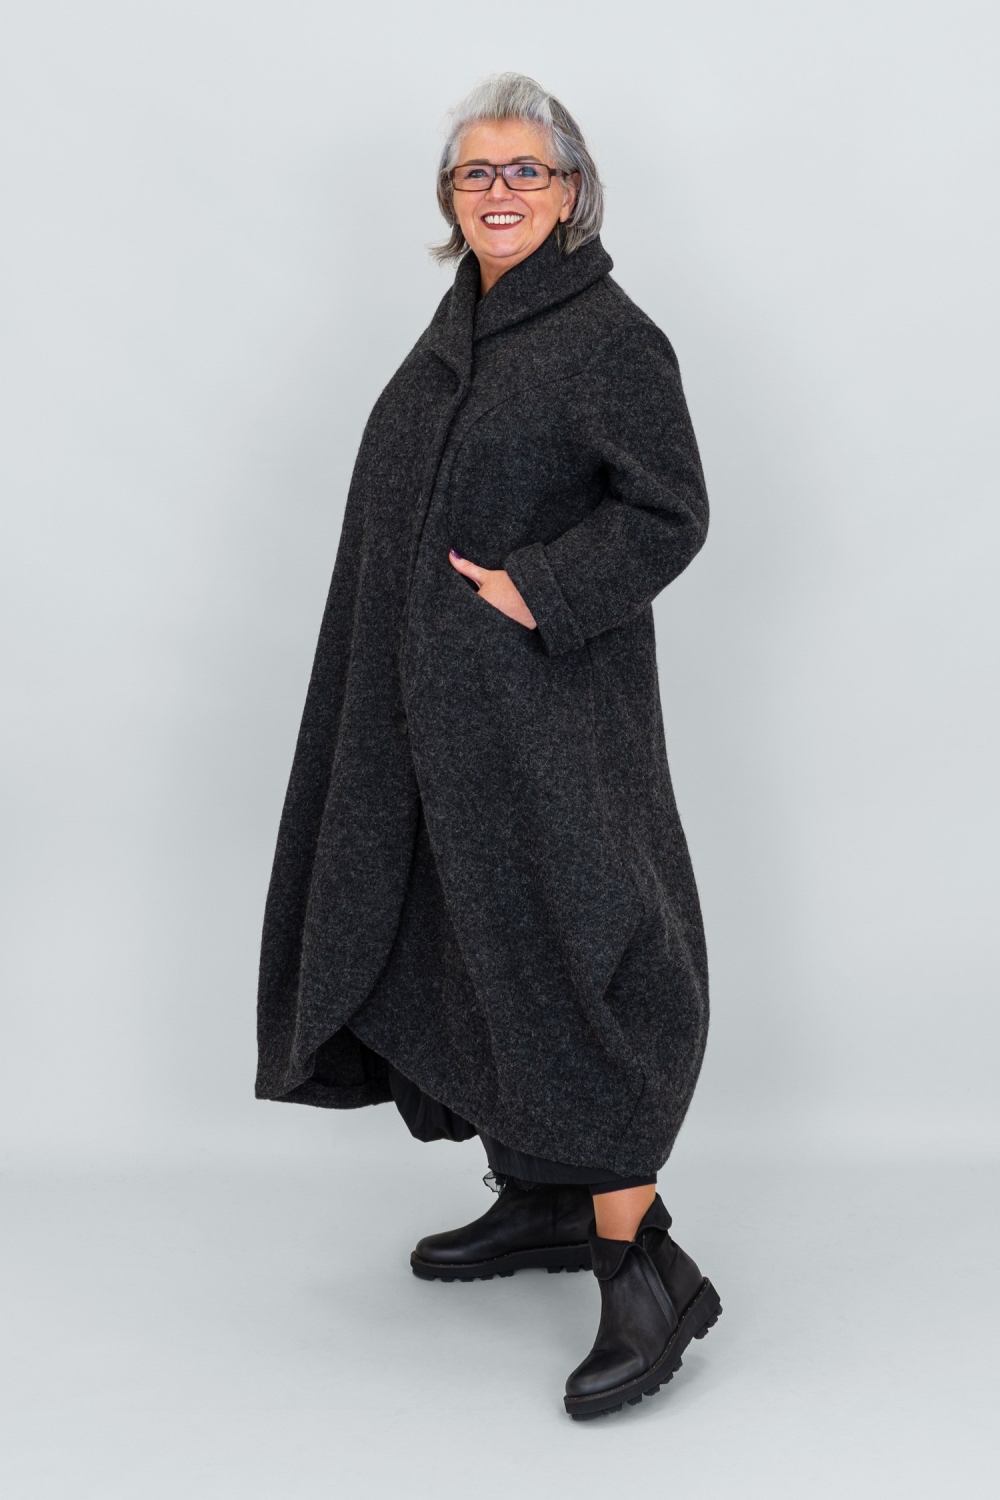 Sesara Mantel im Oversized Look aus 100% Wolle in anthrazit